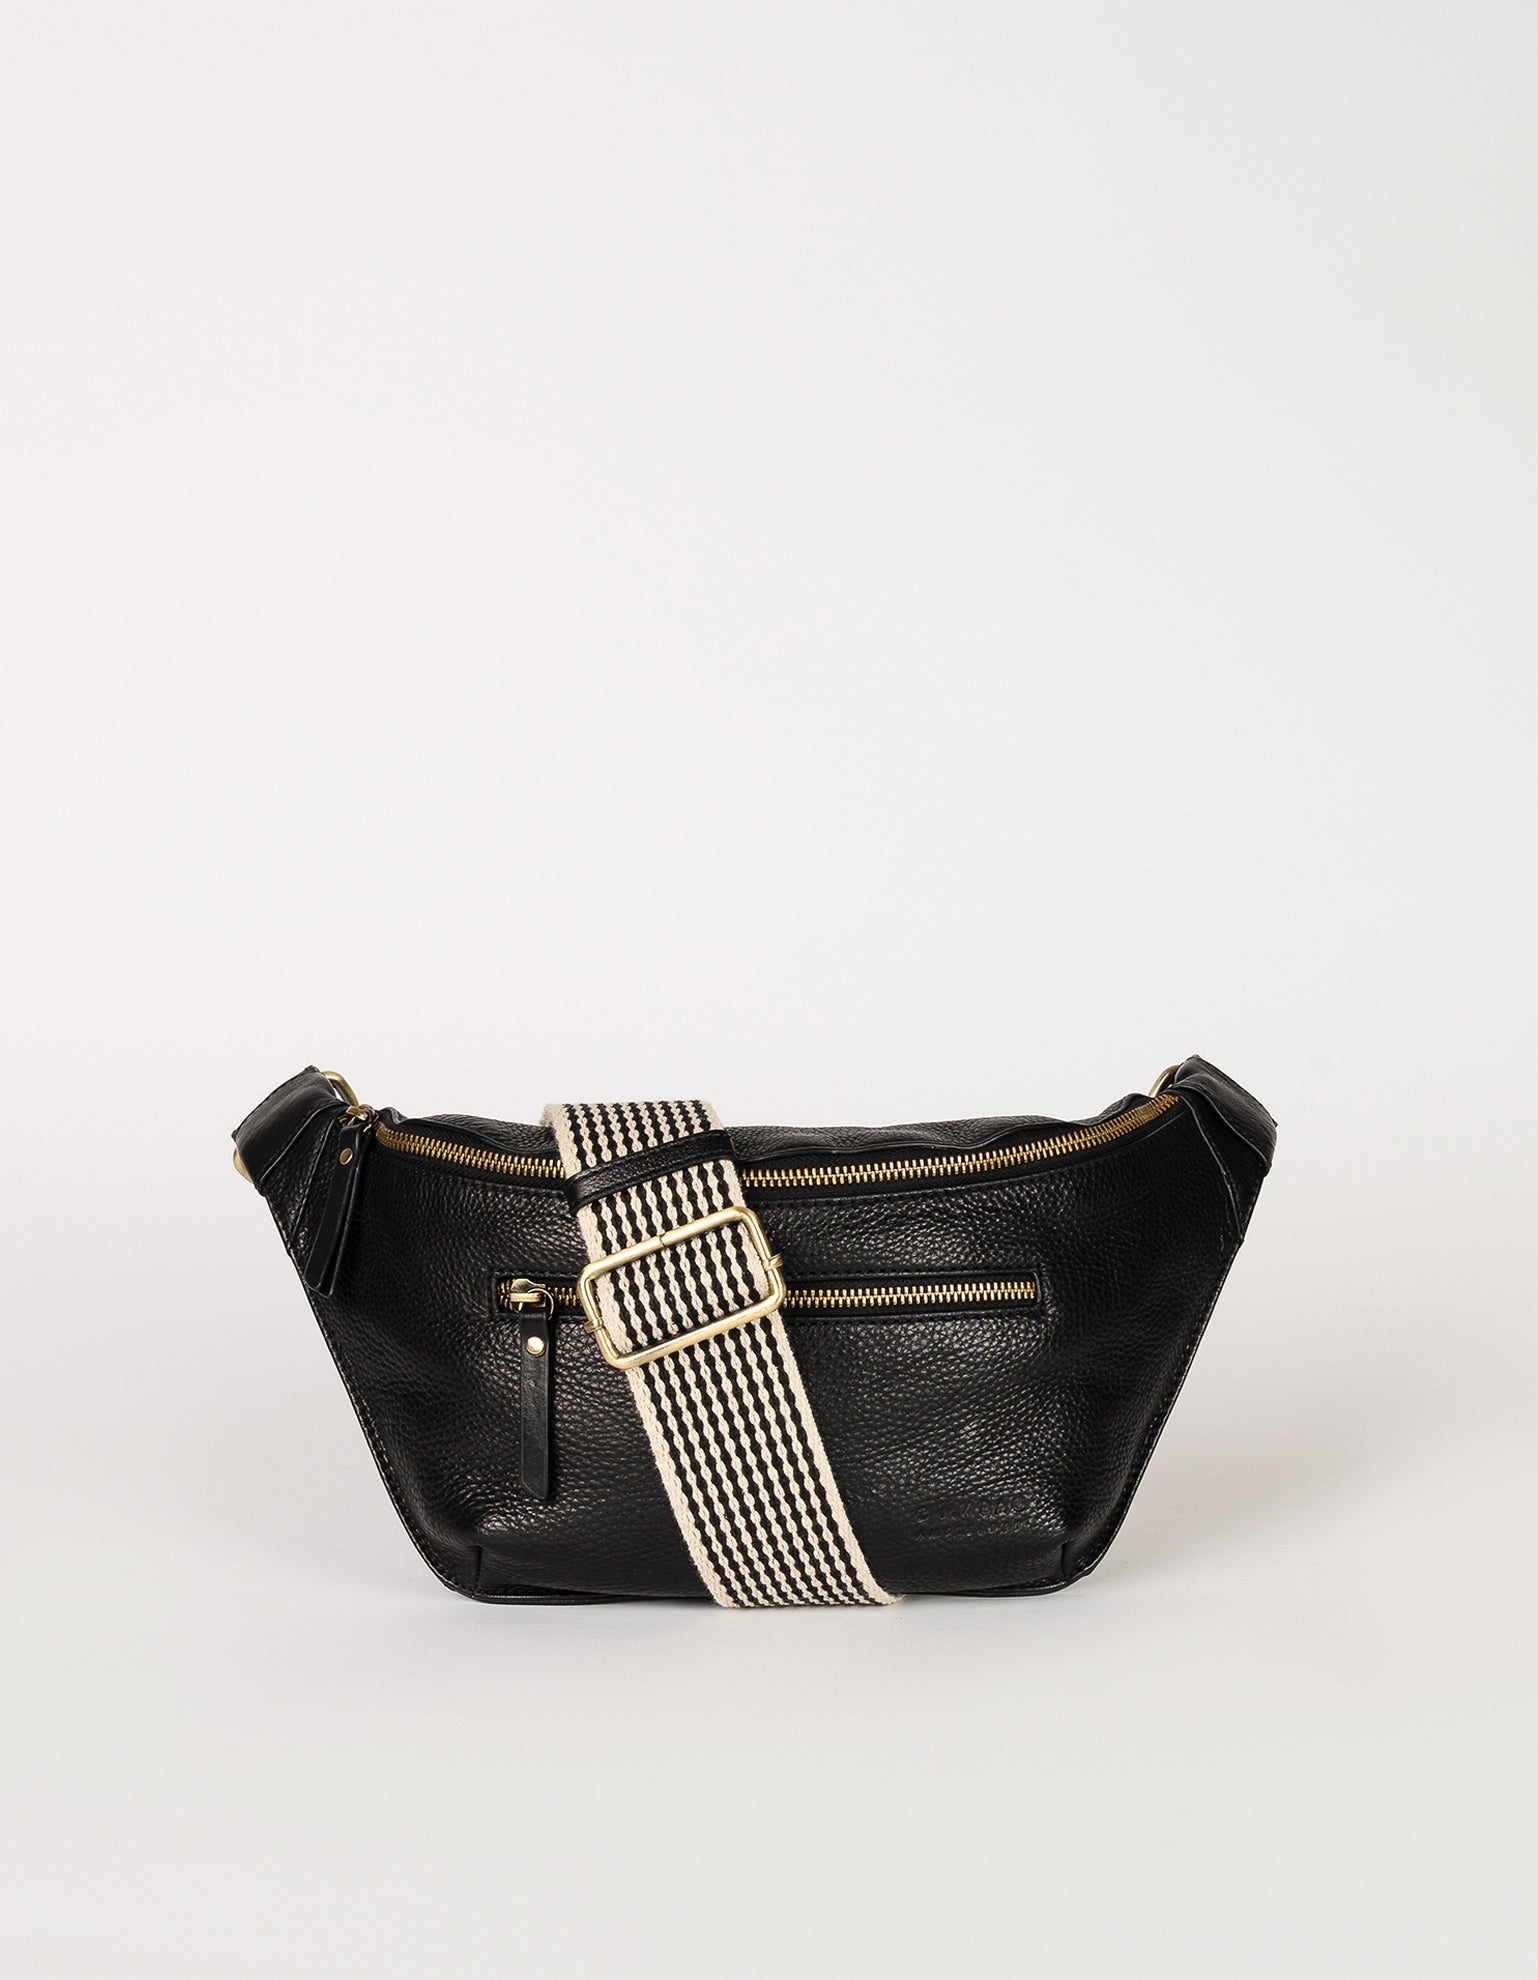 Drew Bum Bag | Soft Grain Leather